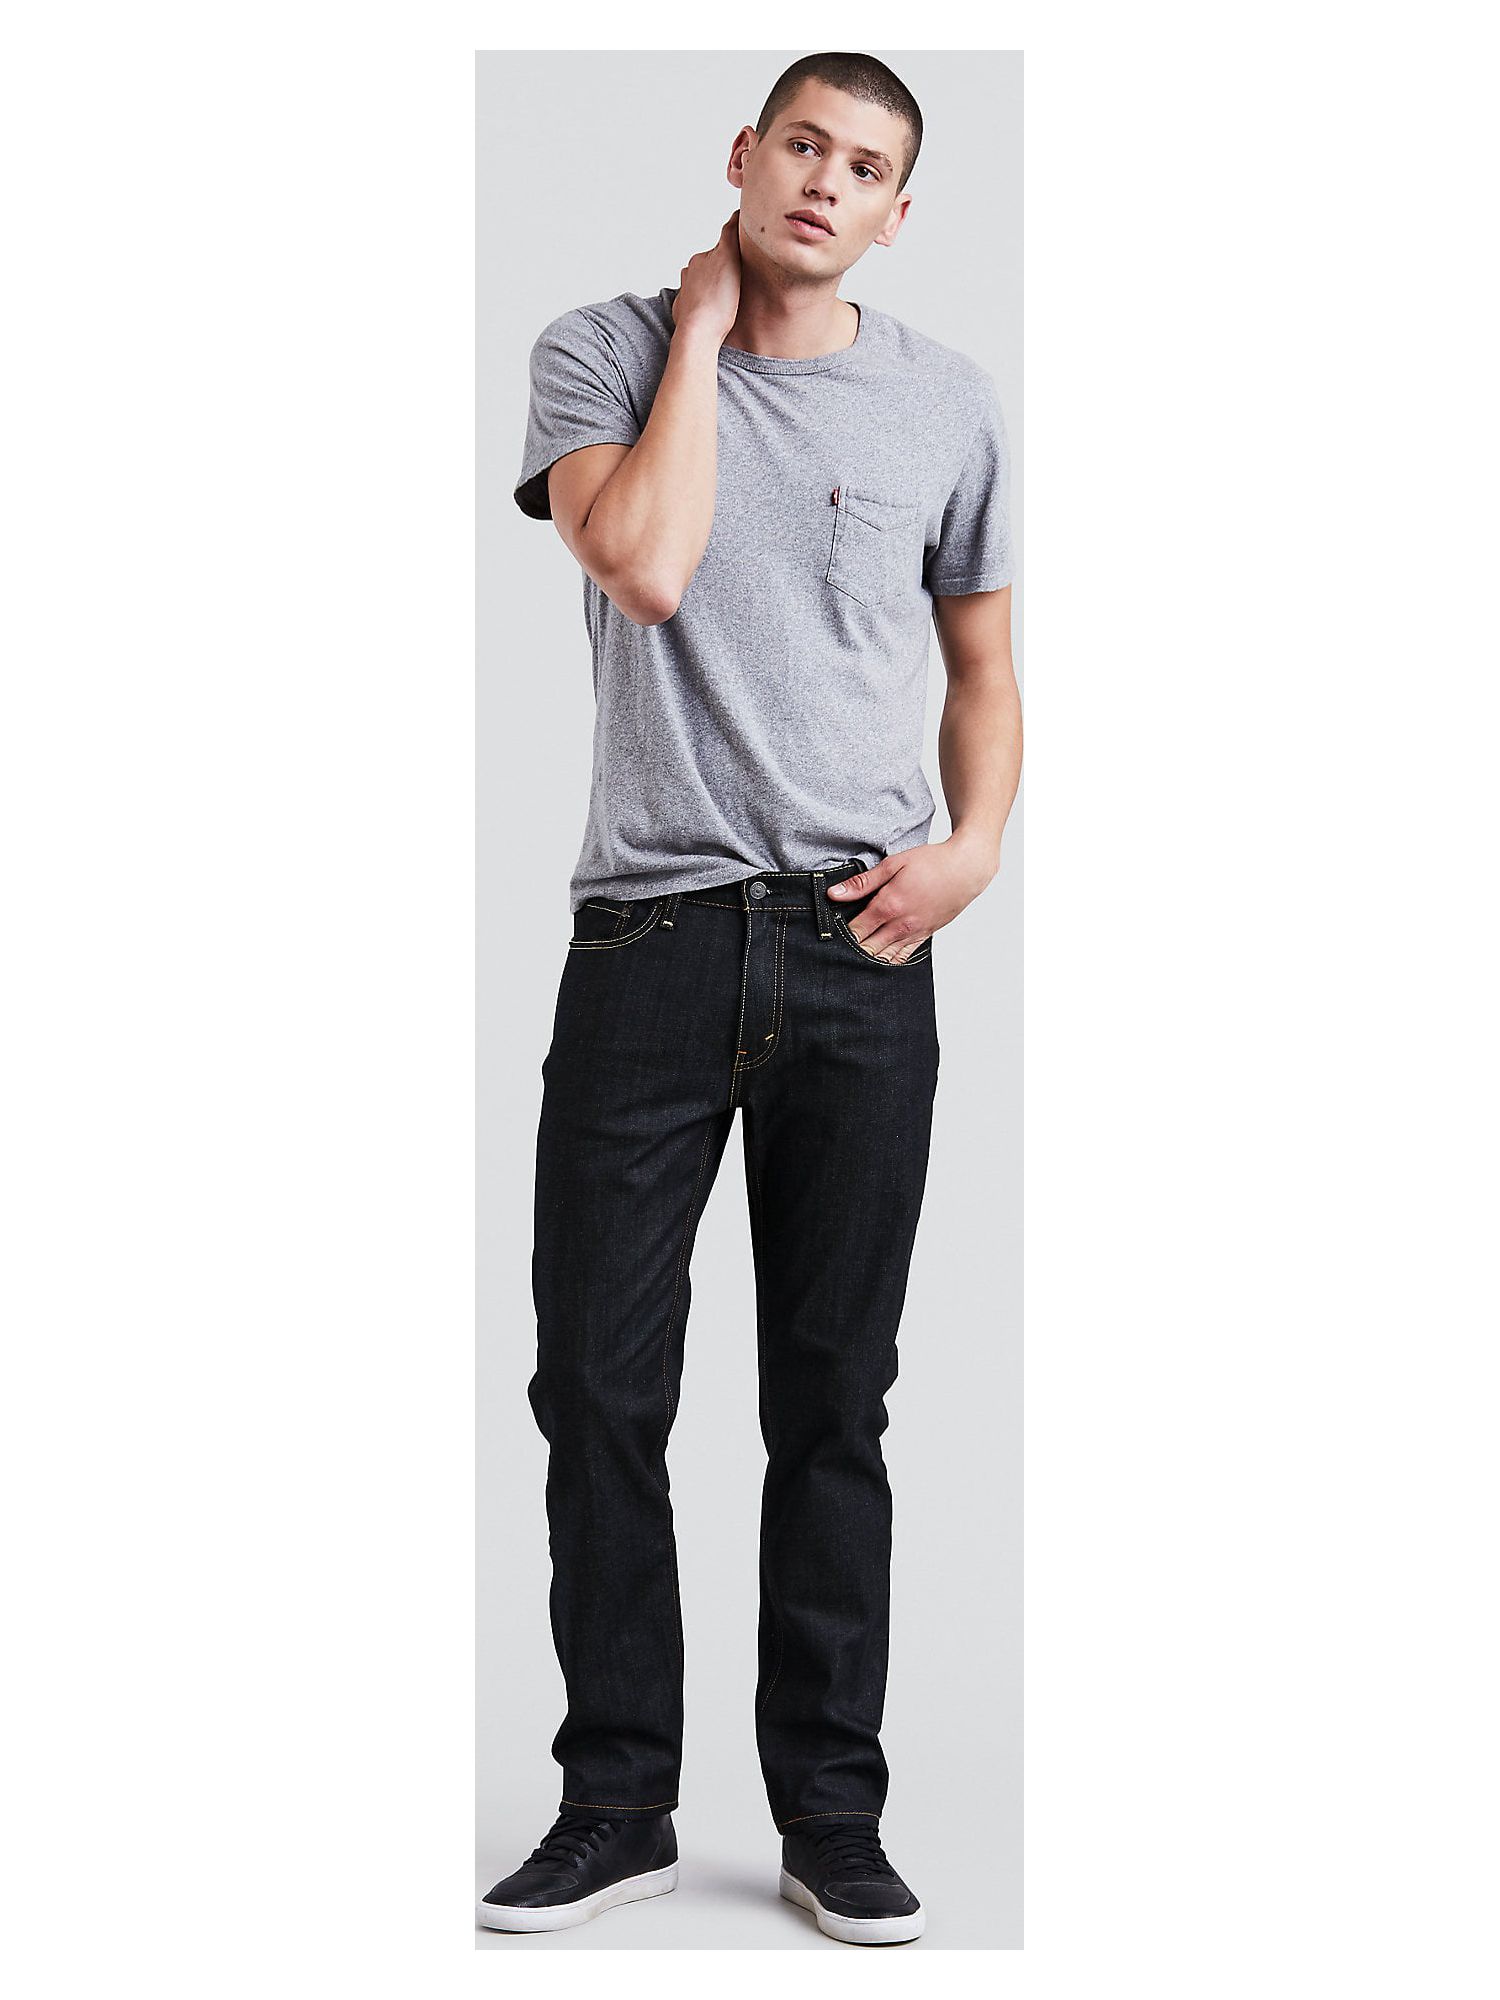 Levi's Men's 541 Athletic Fit Taper Jeans - image 3 of 8